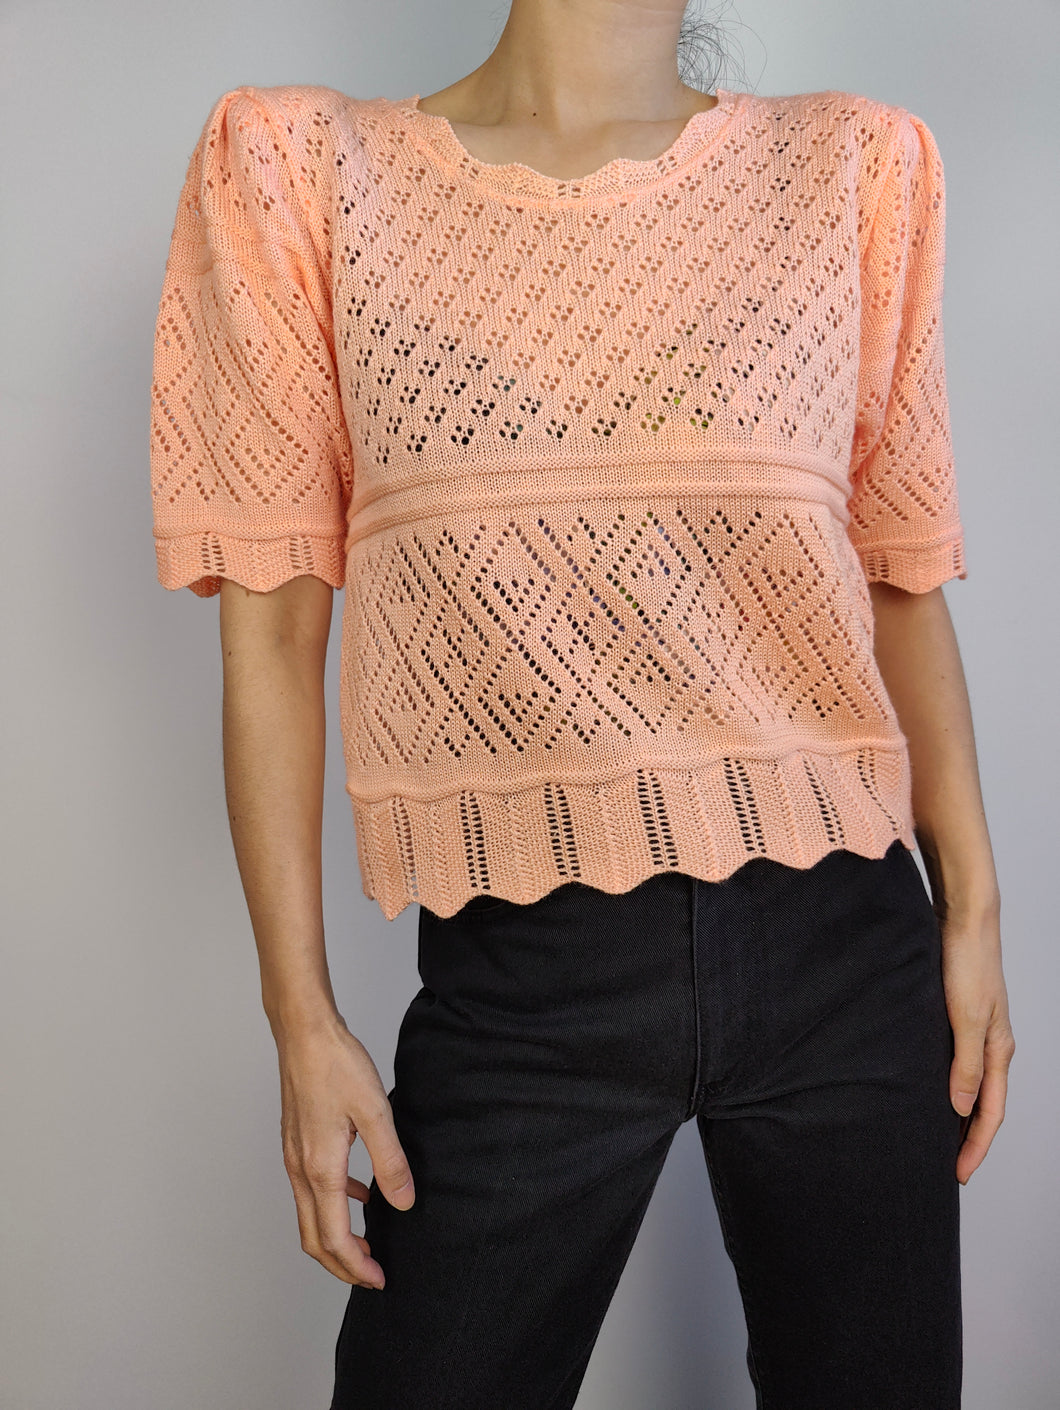 The Peach Crochet Knit Top | Vintage orange pink sweater jumper plain women summer spring M